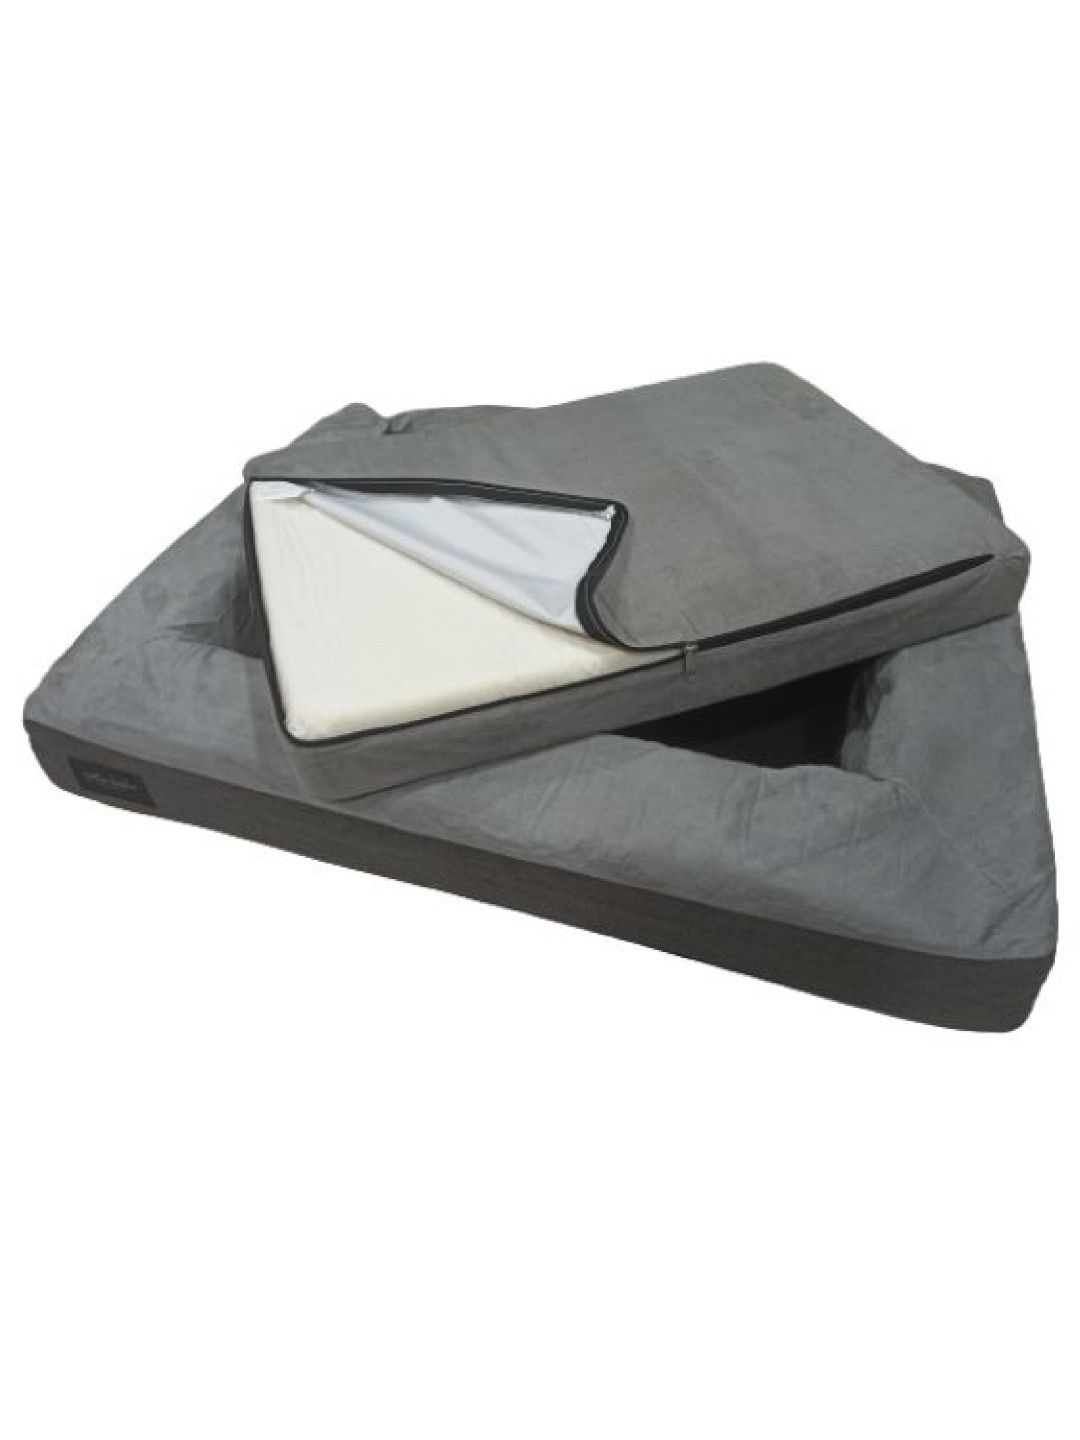 Petto Beddo Bed Cover (Gray- Image 1)